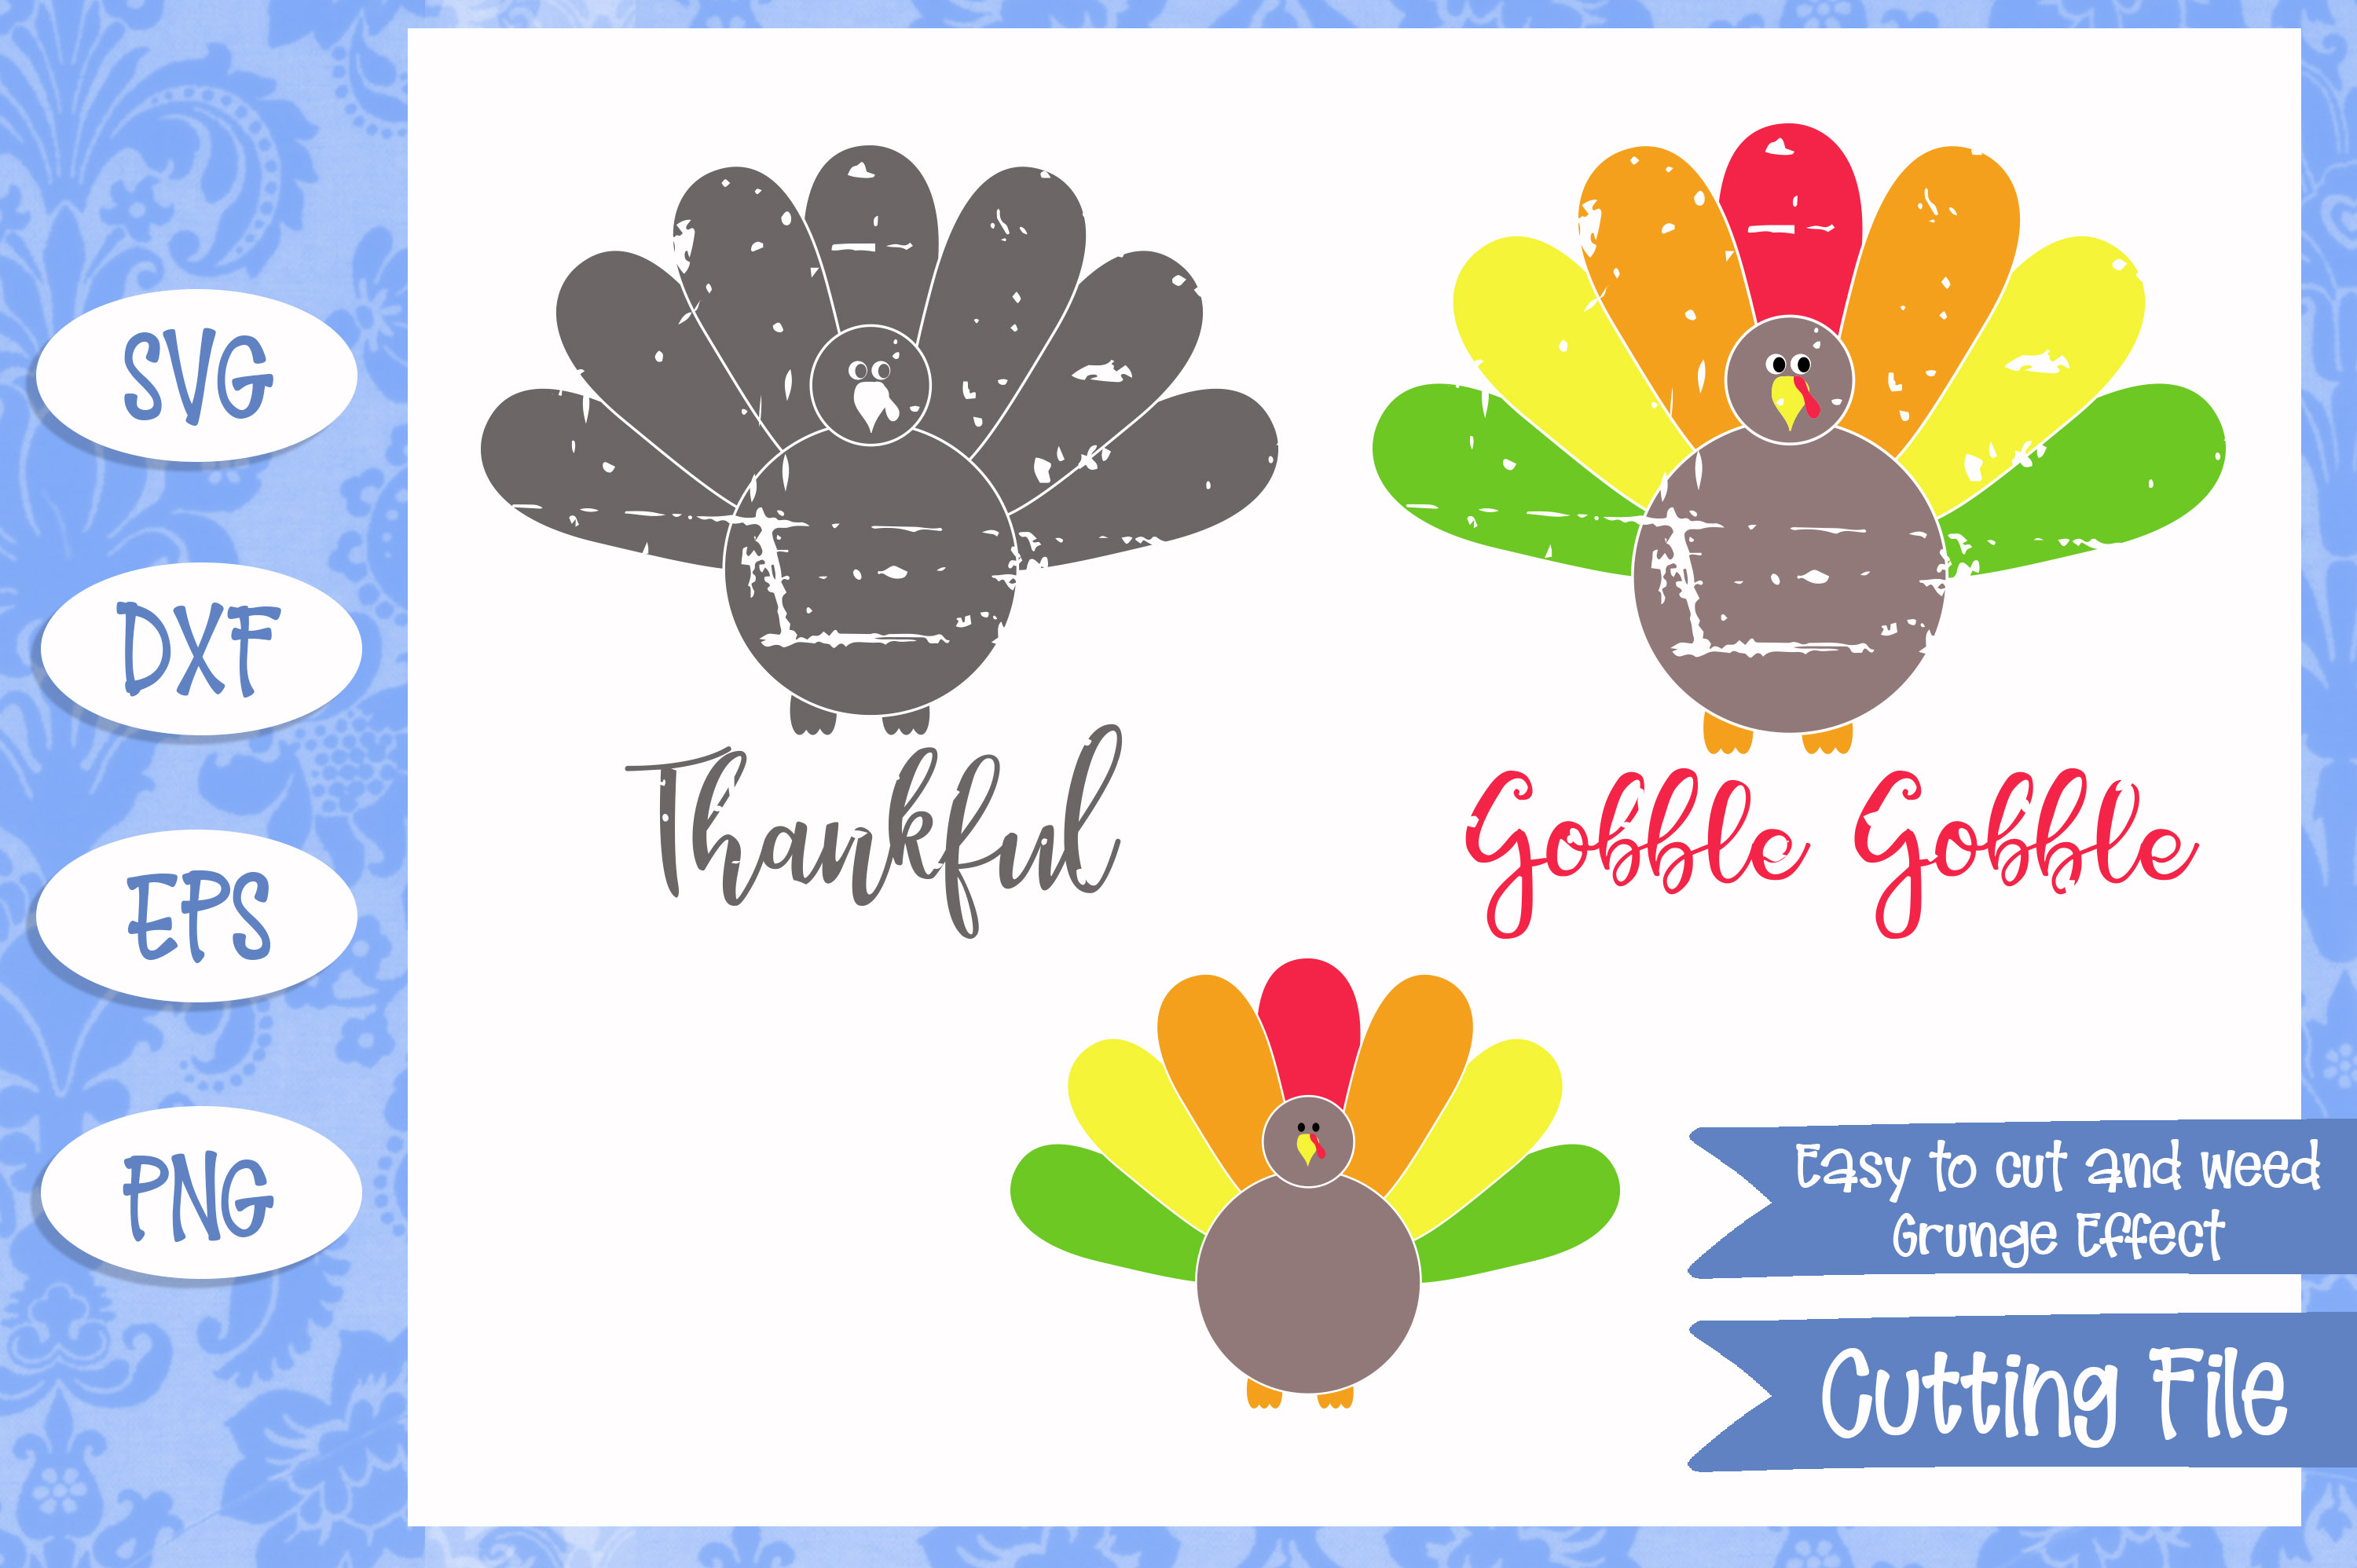 Free Svg Turkey File : Cute Turkey Thanksgiving Svg Files For